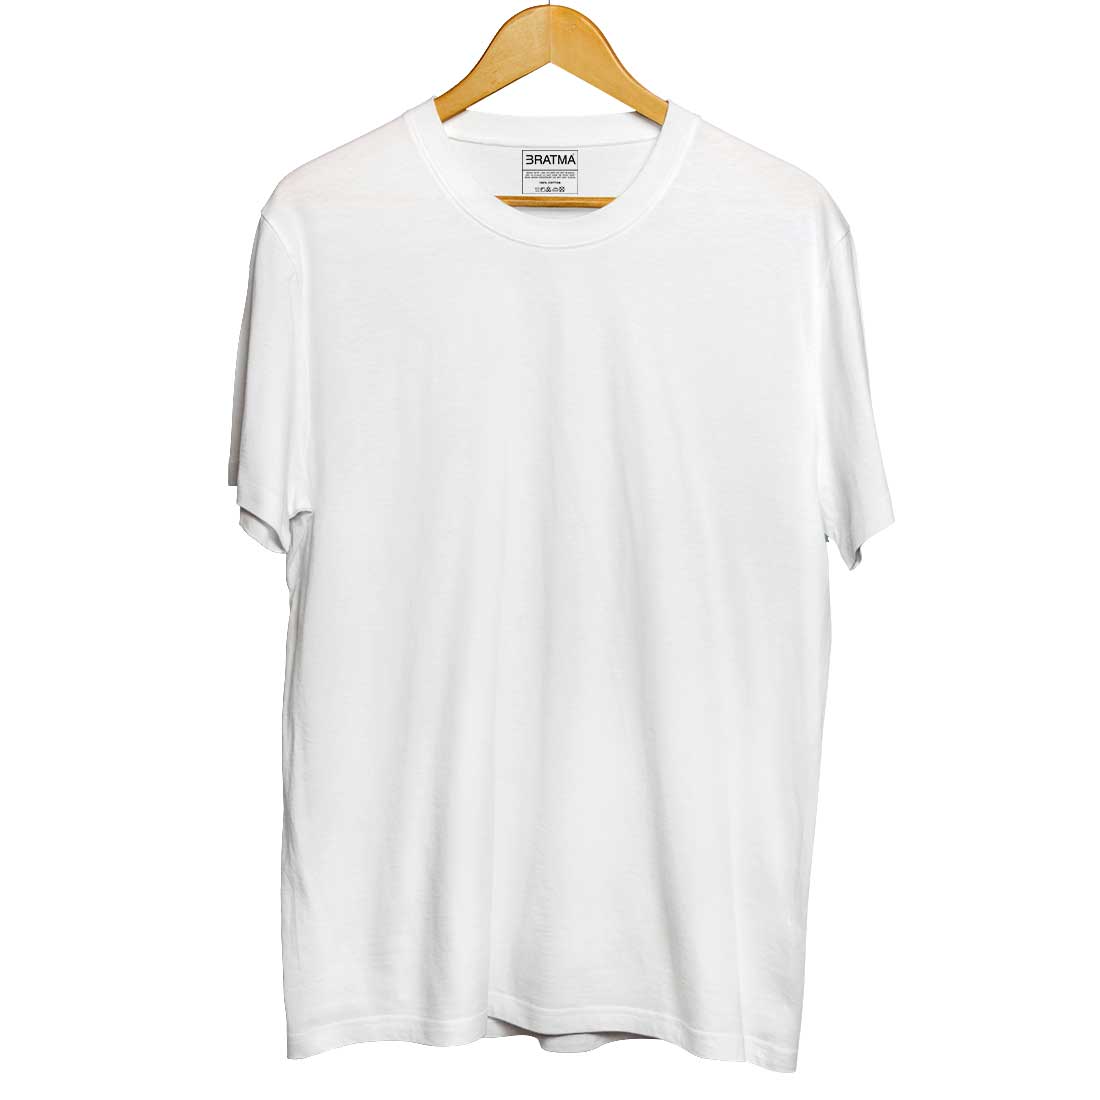 Woman White Half Sleeves Plain T-Shirt